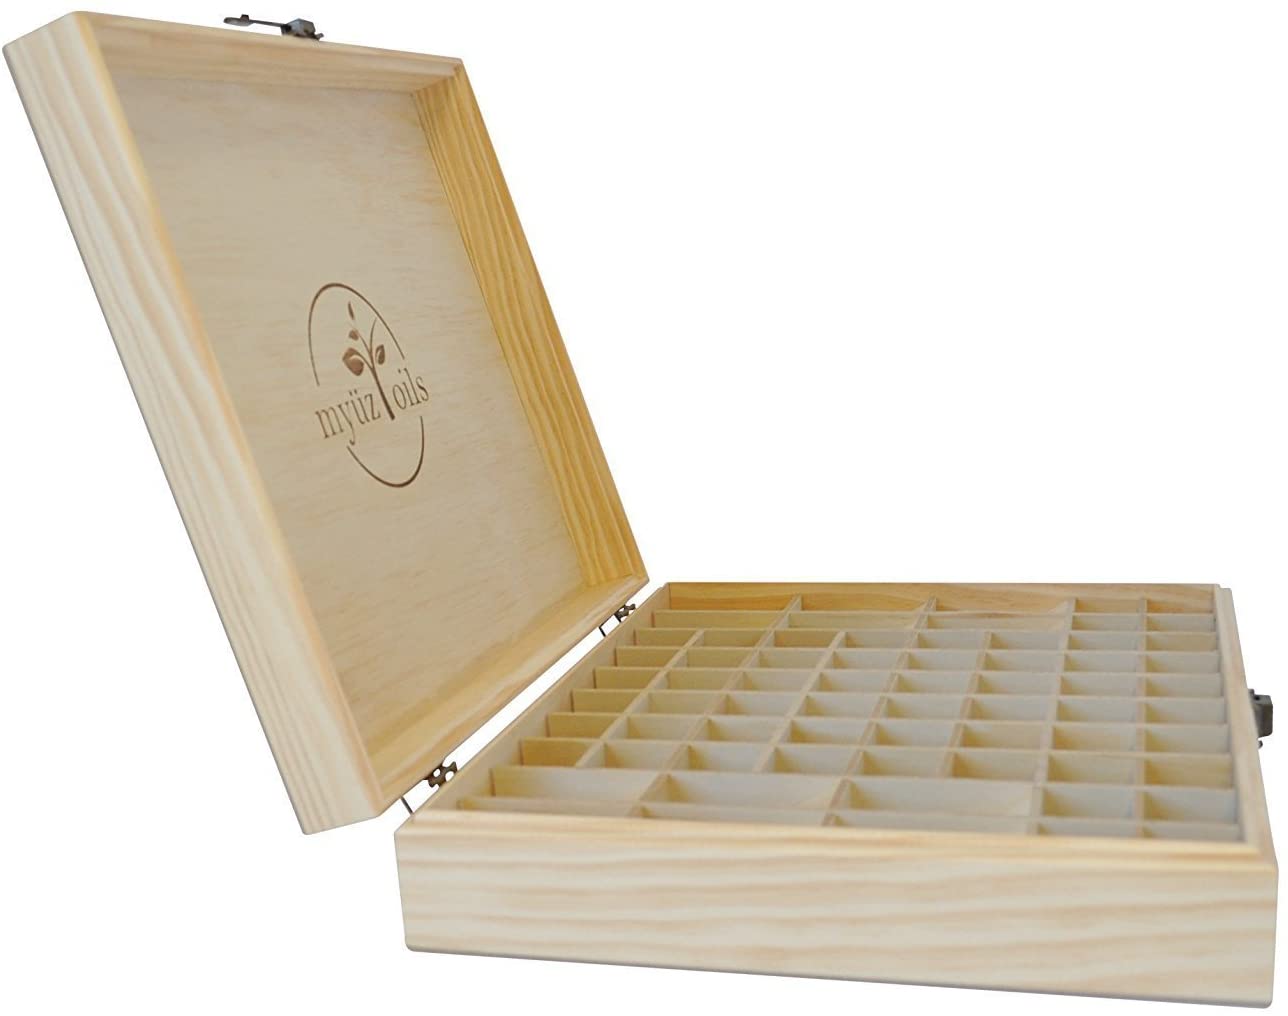 Myüz Oils 68 Slot Wooden Essential Oil Box/case, Holds 68 5mL, 10mL, 15mL Perfect Essential Oil Storage/Organizer Case for Travel and Presentation